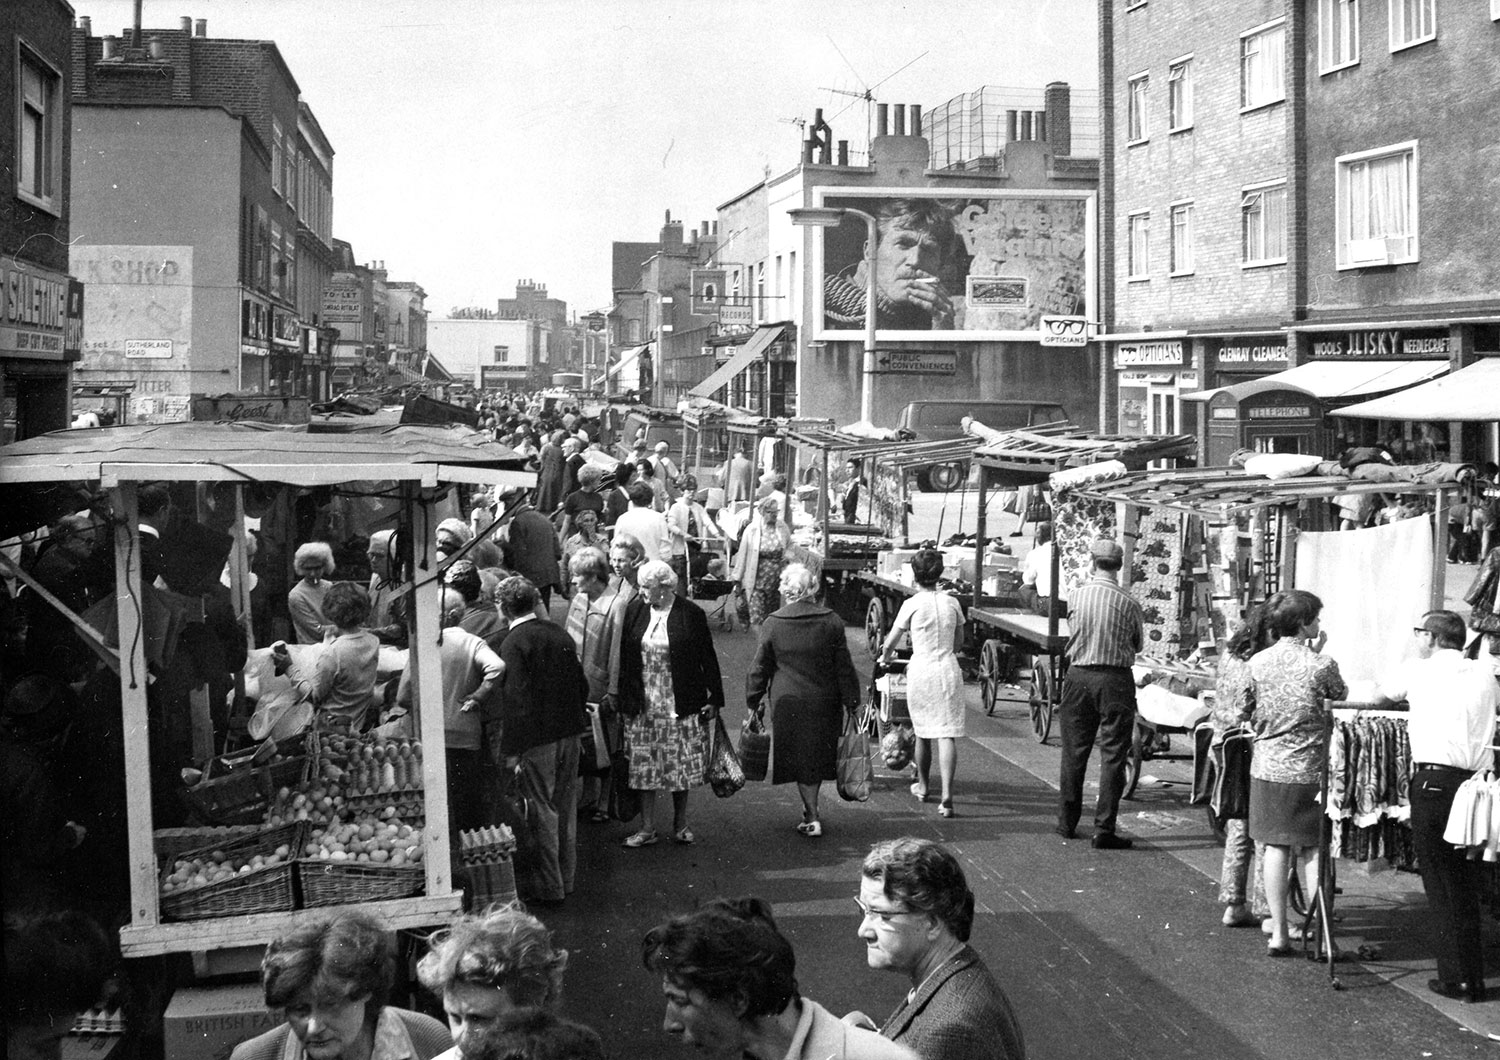 Archive image of Roman Road Market, East London